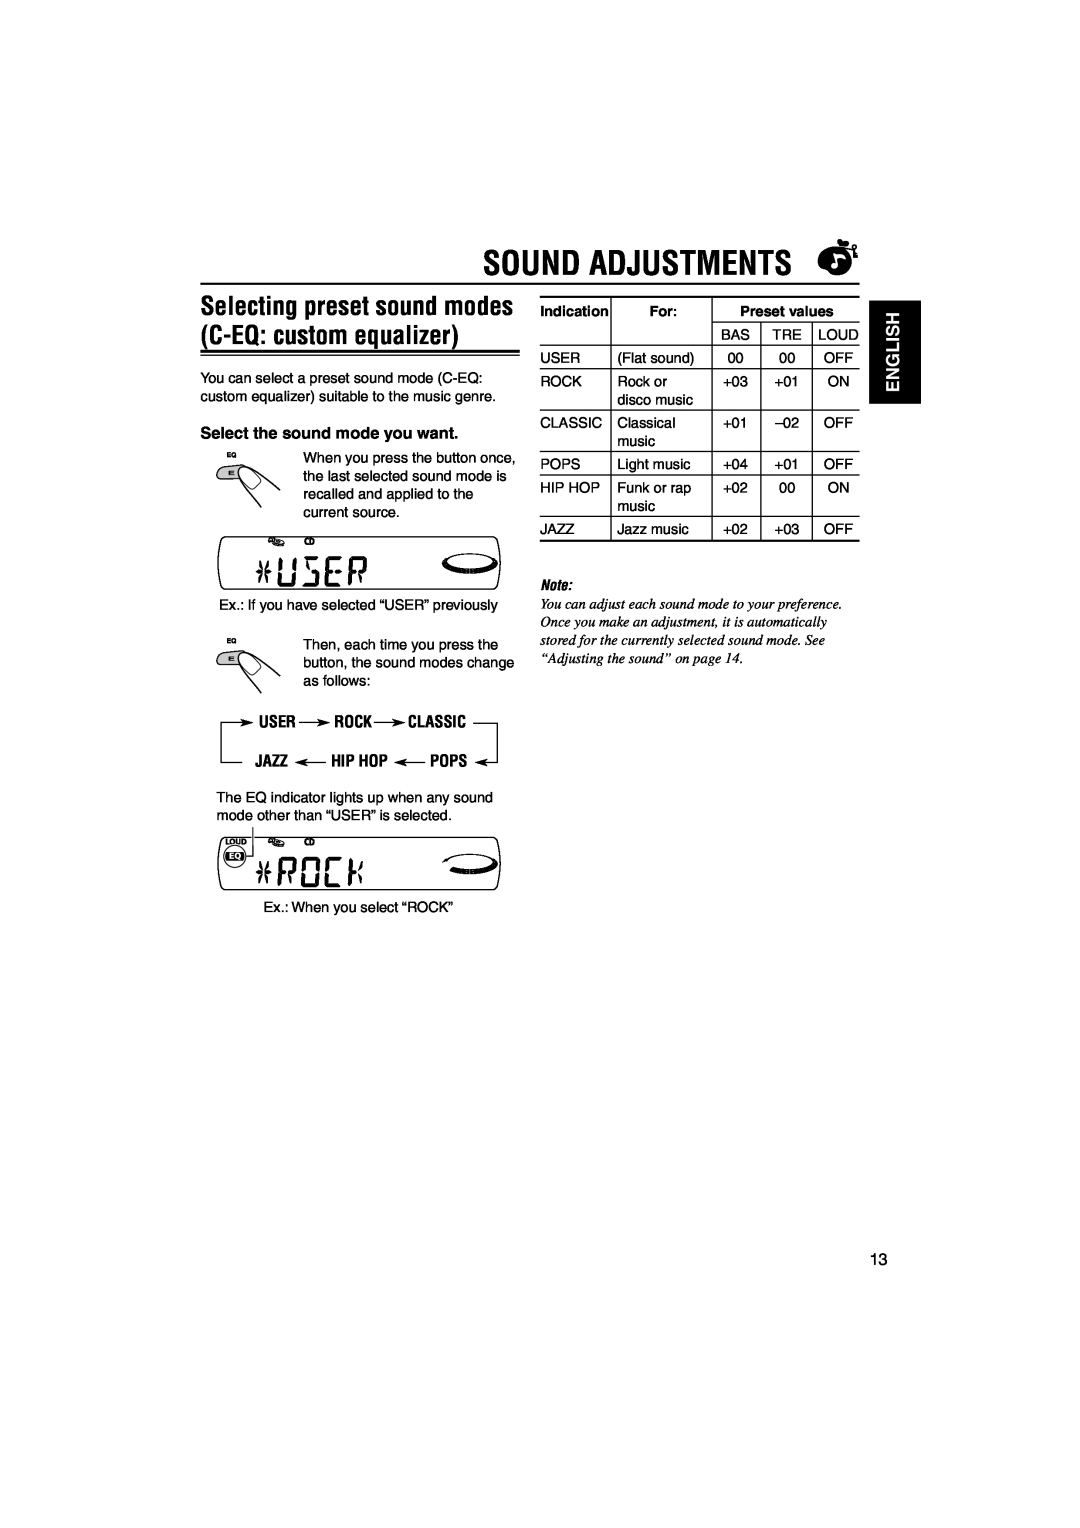 JVC KD-SX50M, KD-SX60WT Sound Adjustments, English, Select the sound mode you want, User Rock Classic Jazz Hip Hop Pops 